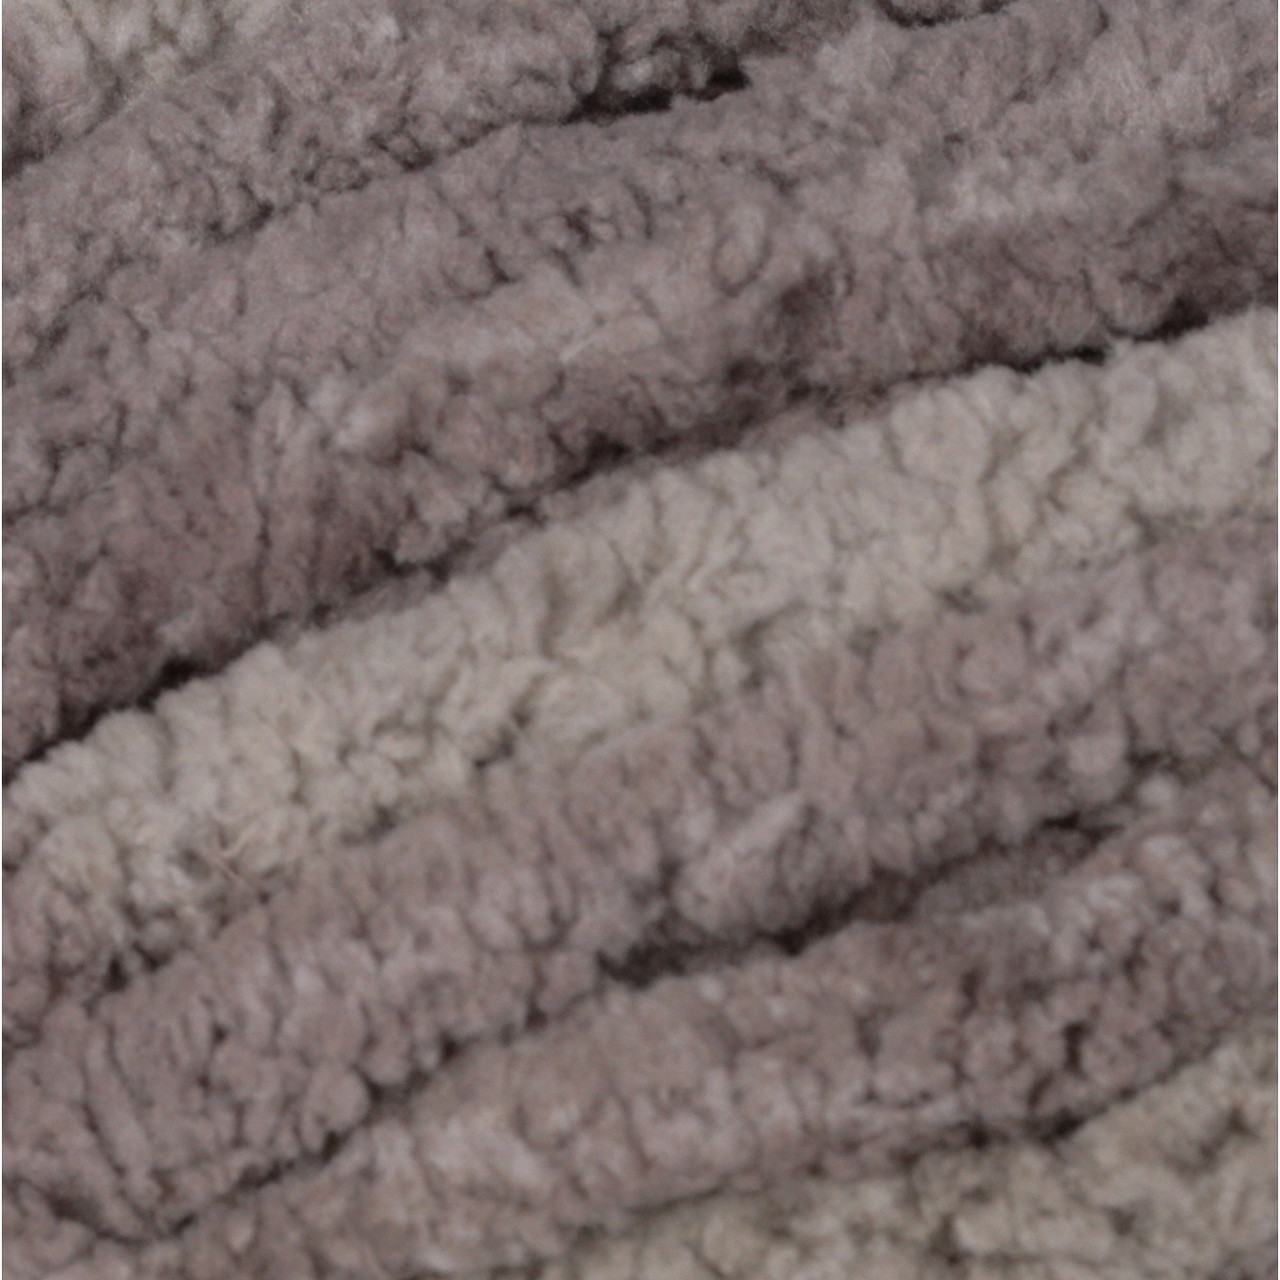  Bernat Blanket Yarn (3-Pack) Taupe 161200-29